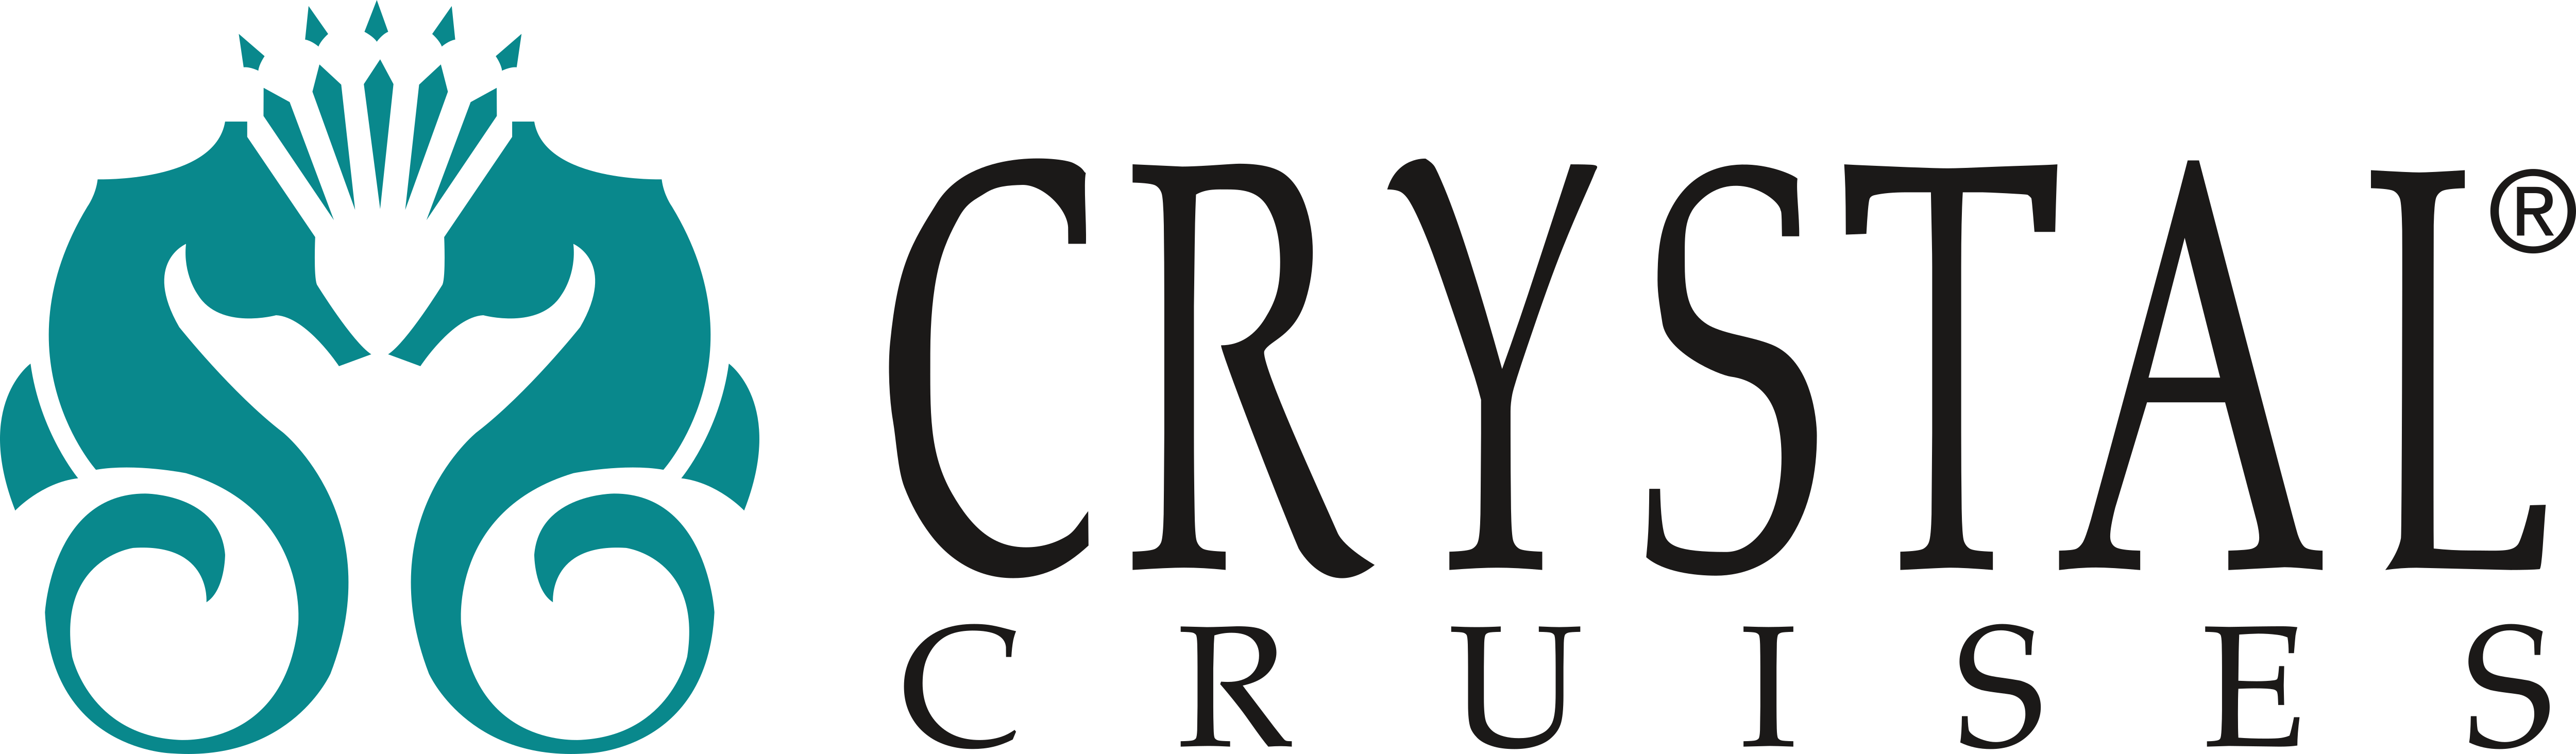 Crystal Cruise